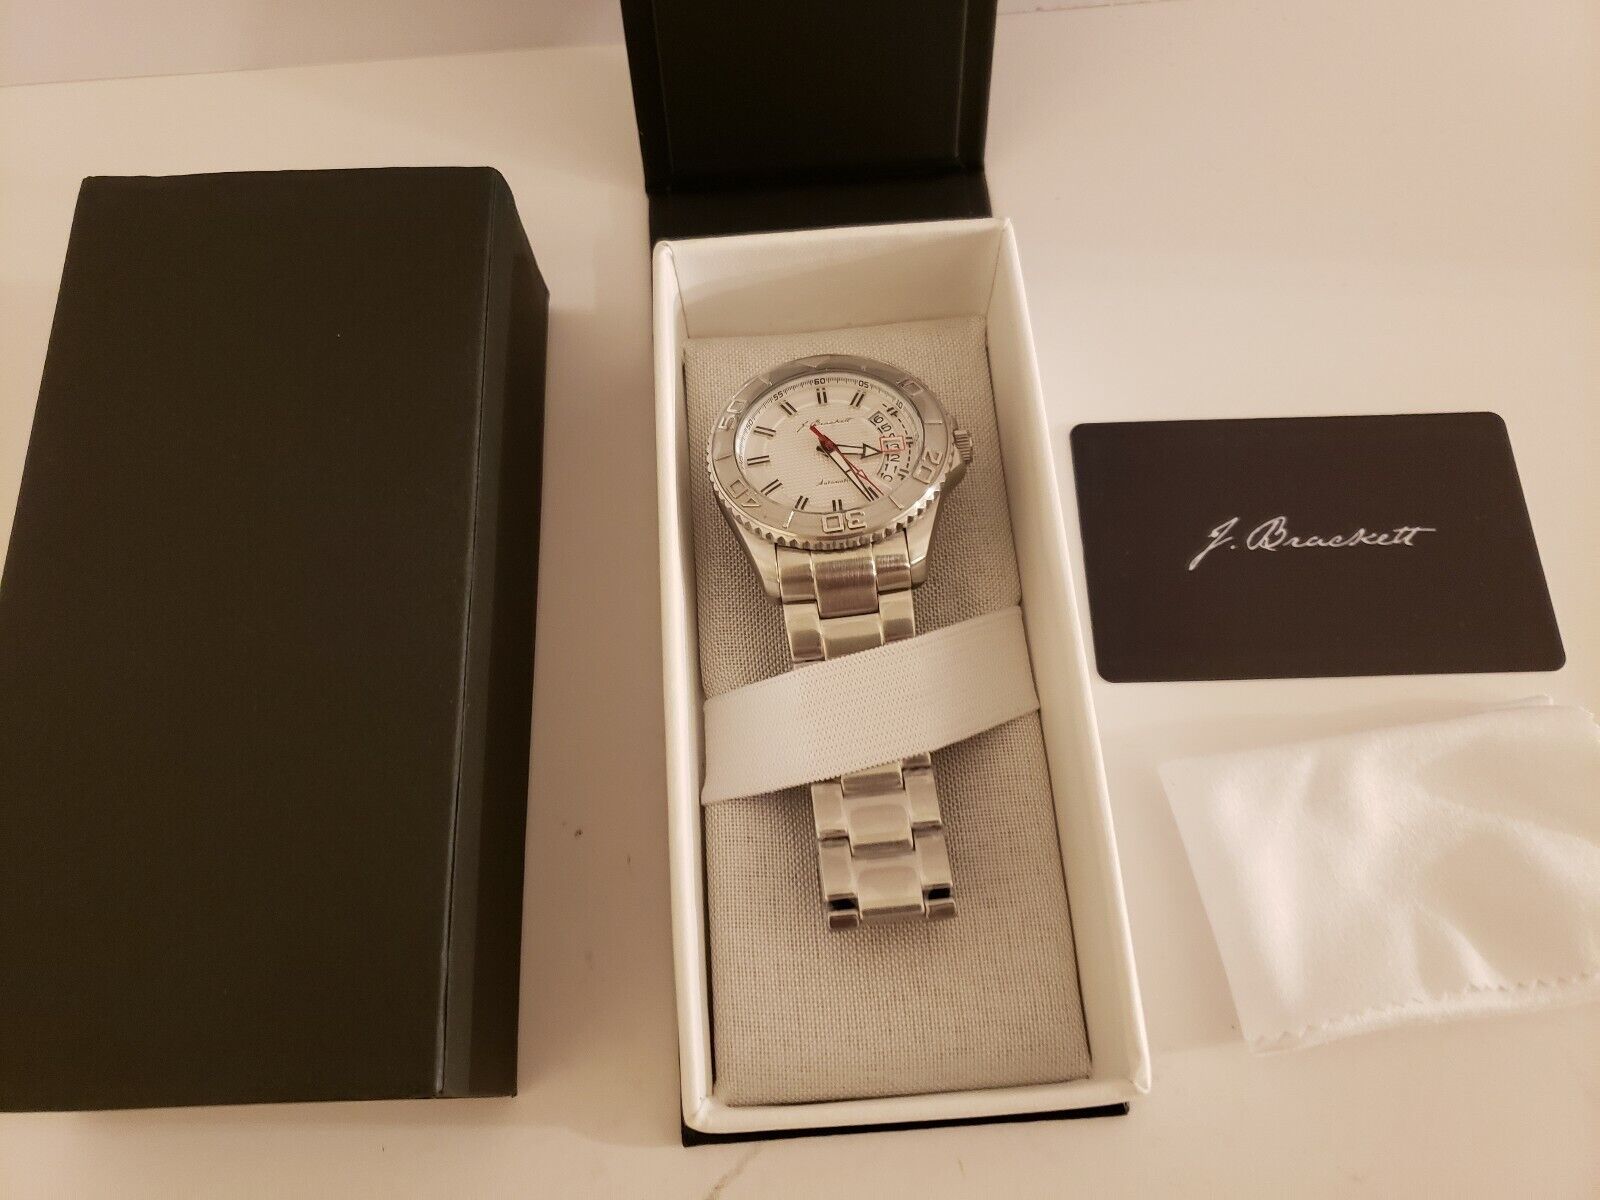 Brand New J. BRACKETT Automatic Chios-White 42mm Men's Watch JB4002 MSRP $425